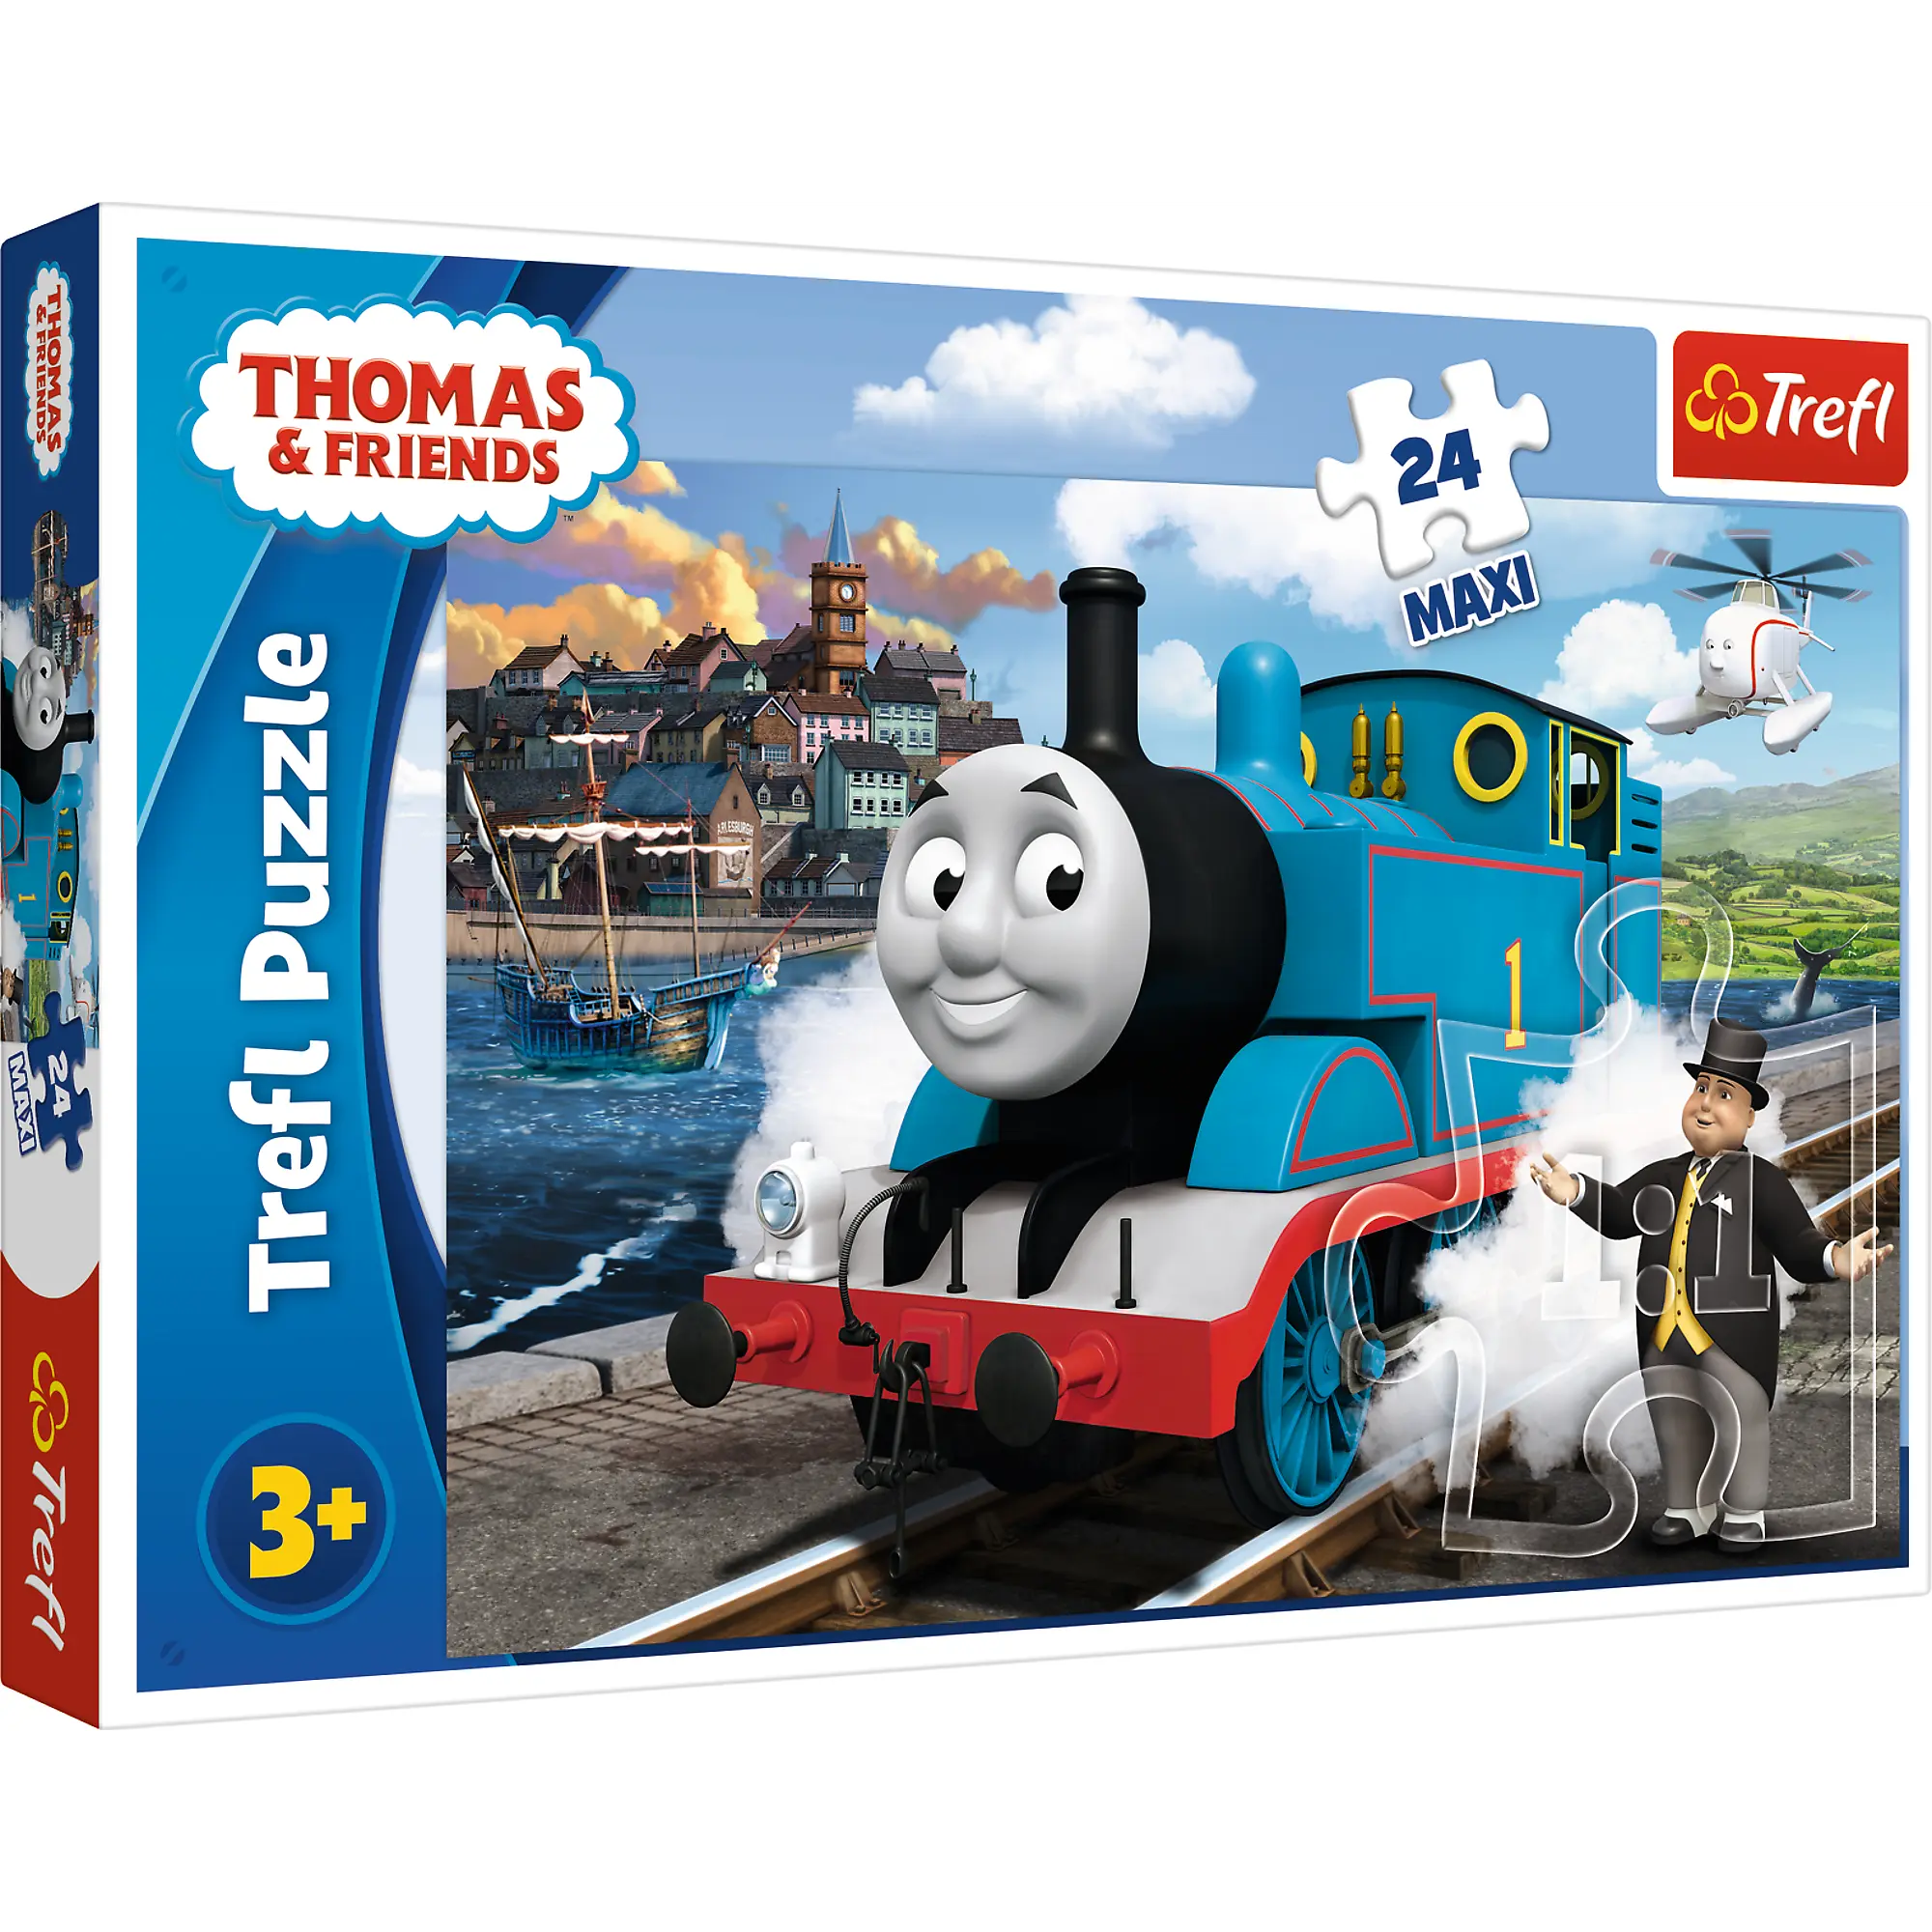 TREFL Maxi puzzle Thomas, 24 pcs (photo 0)